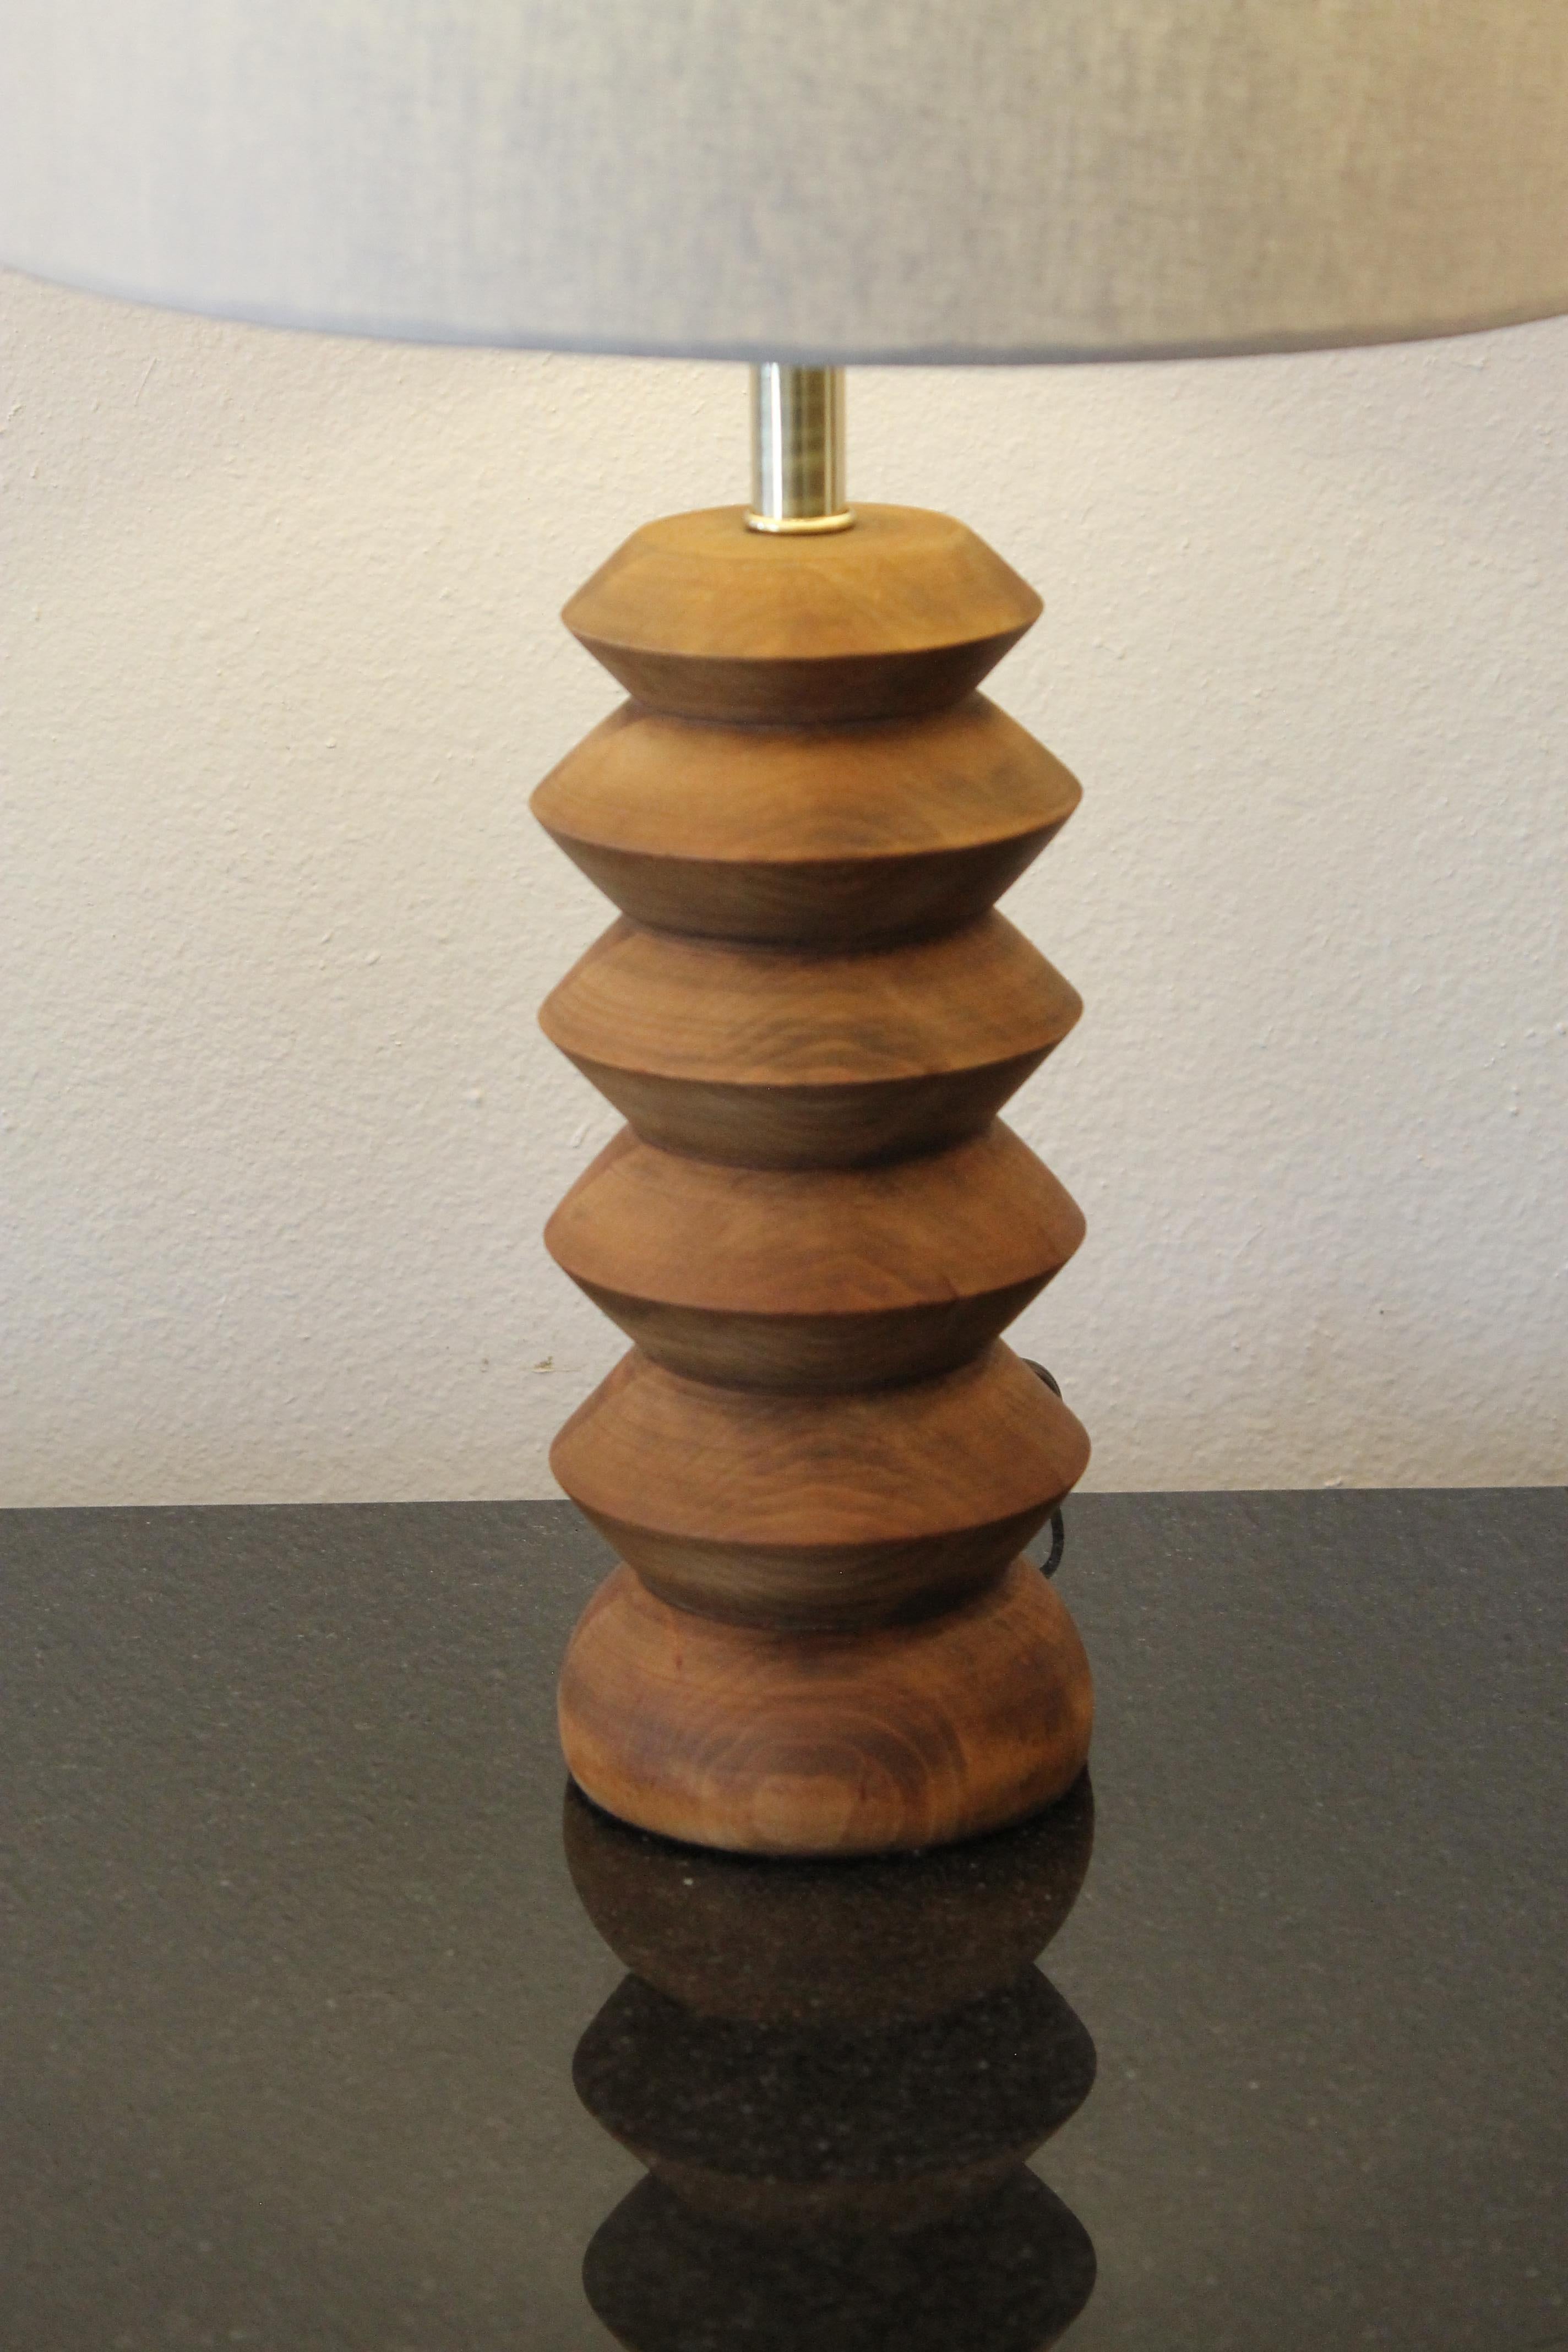 Art Deco wood lamp consisting of stacked wood disks. Lamp measures 13.25